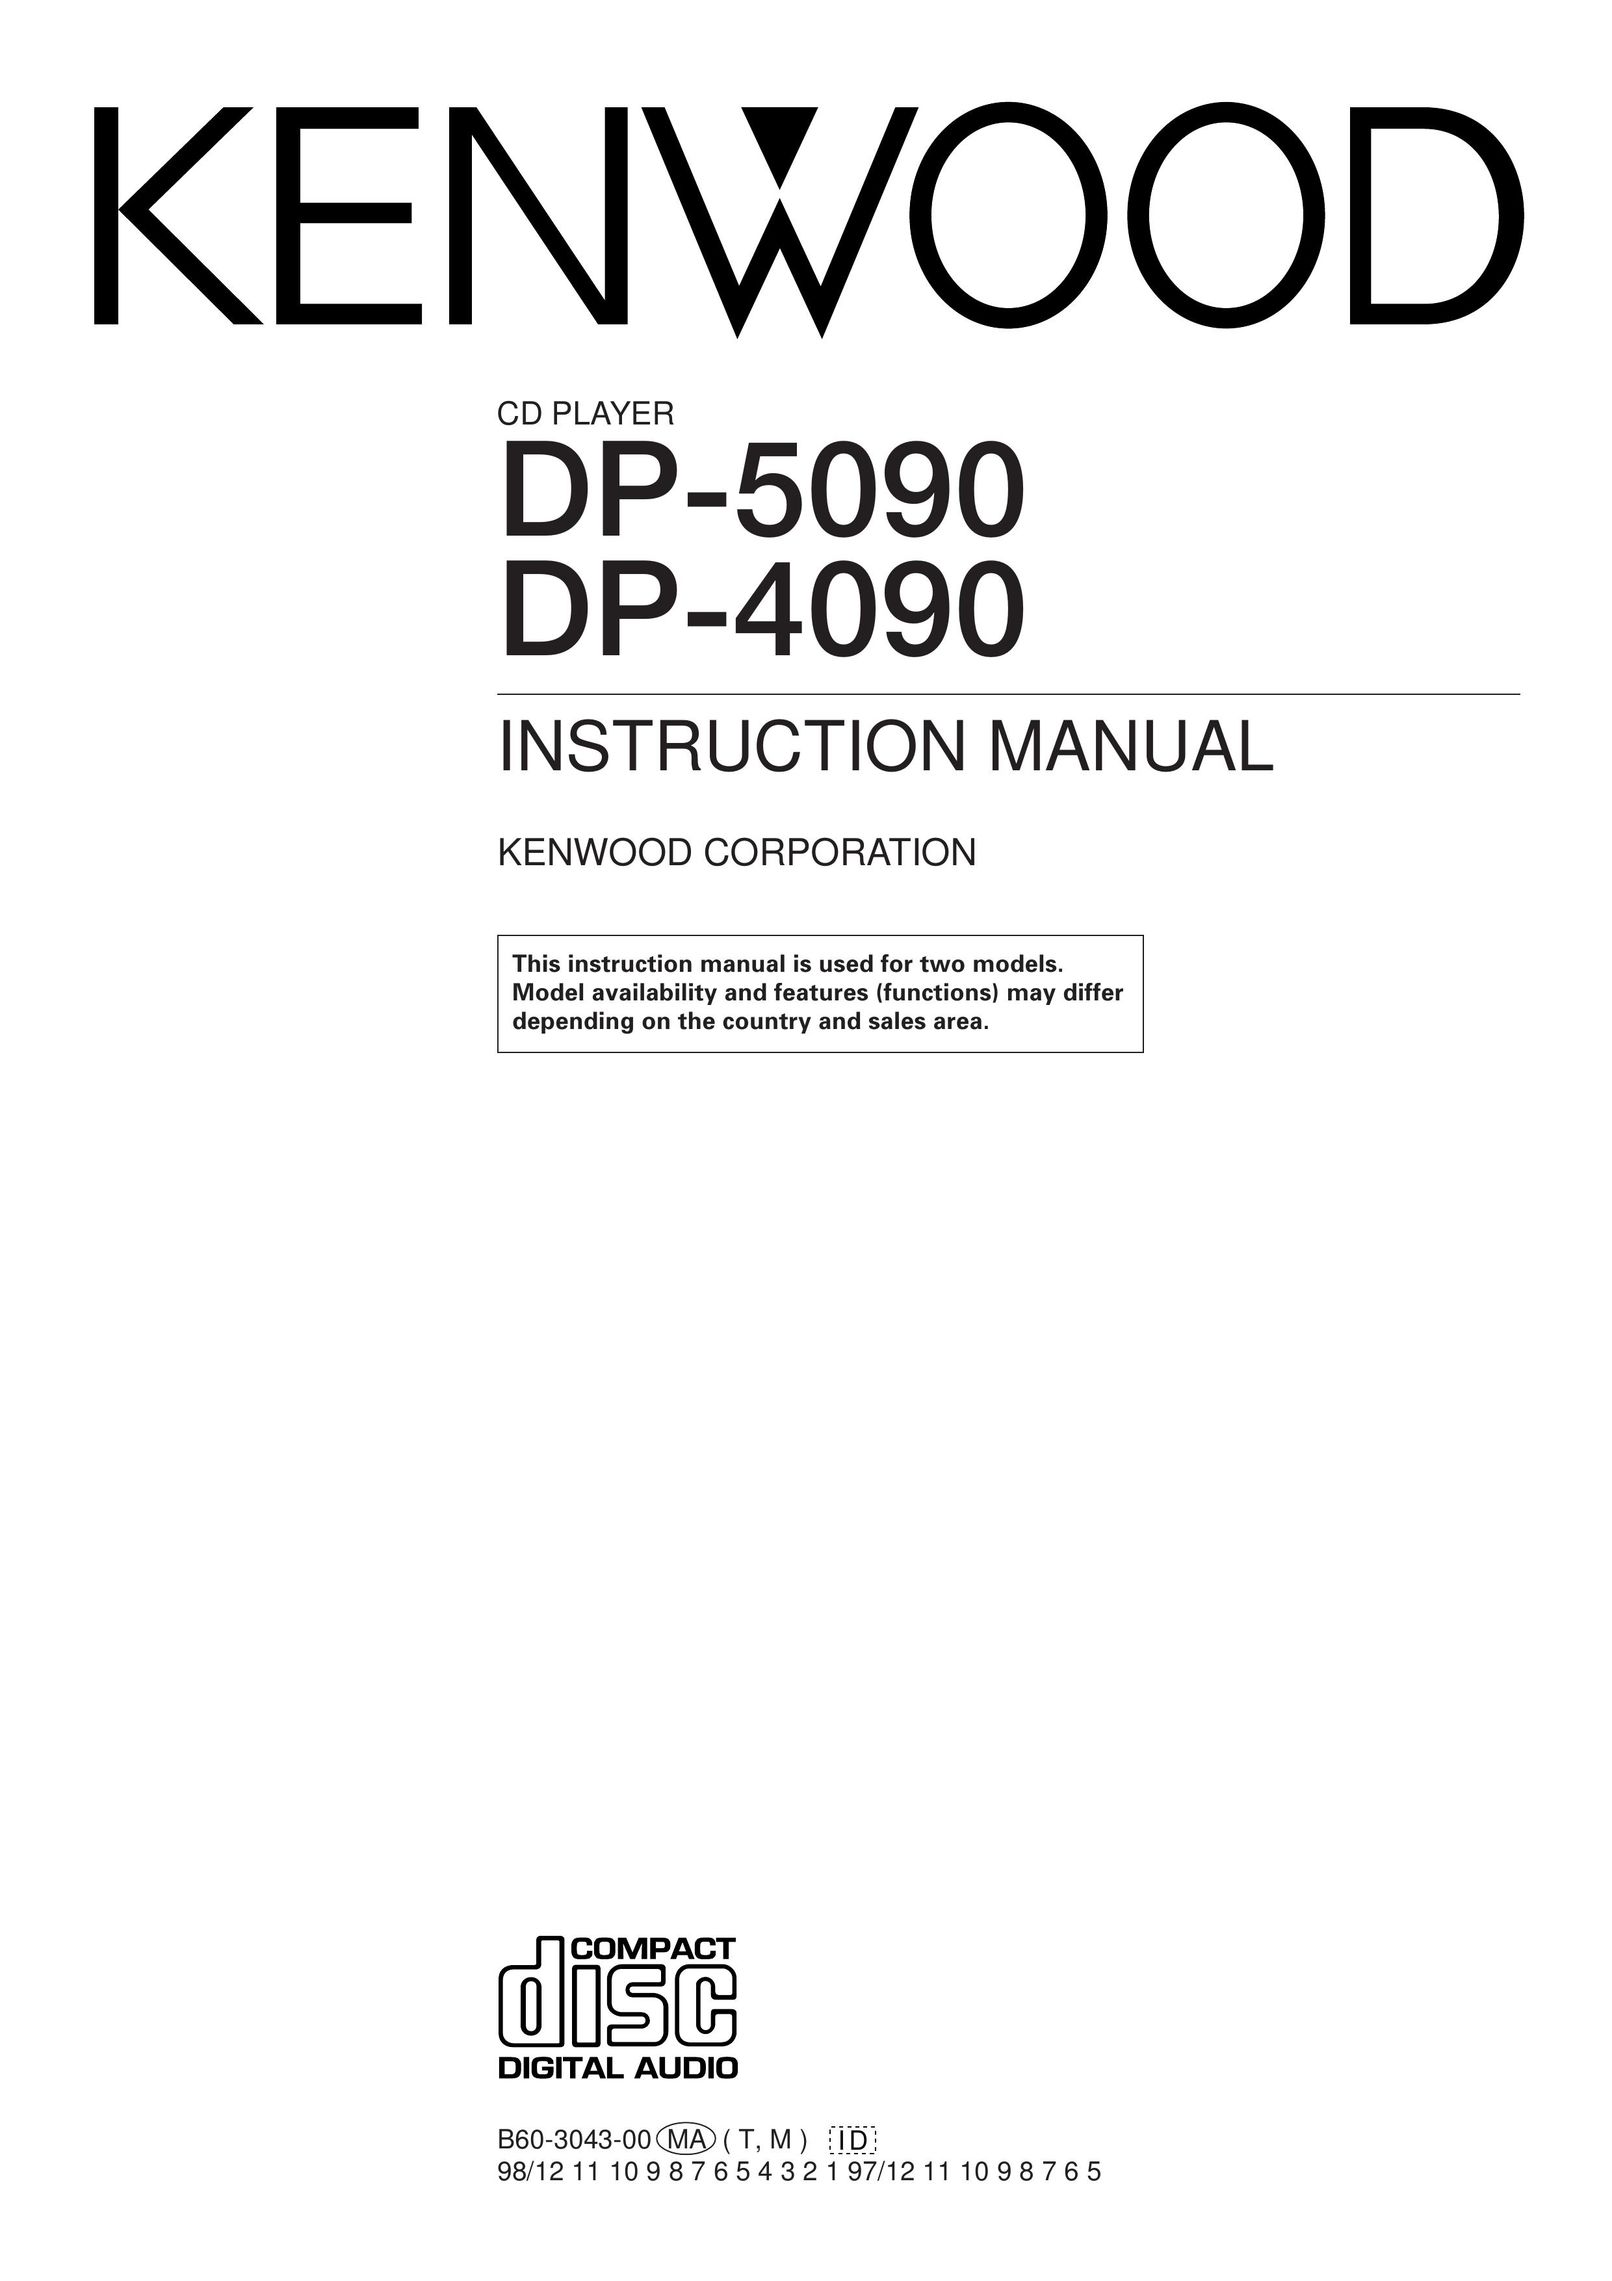 Kenwood DP-5090 CD Player User Manual